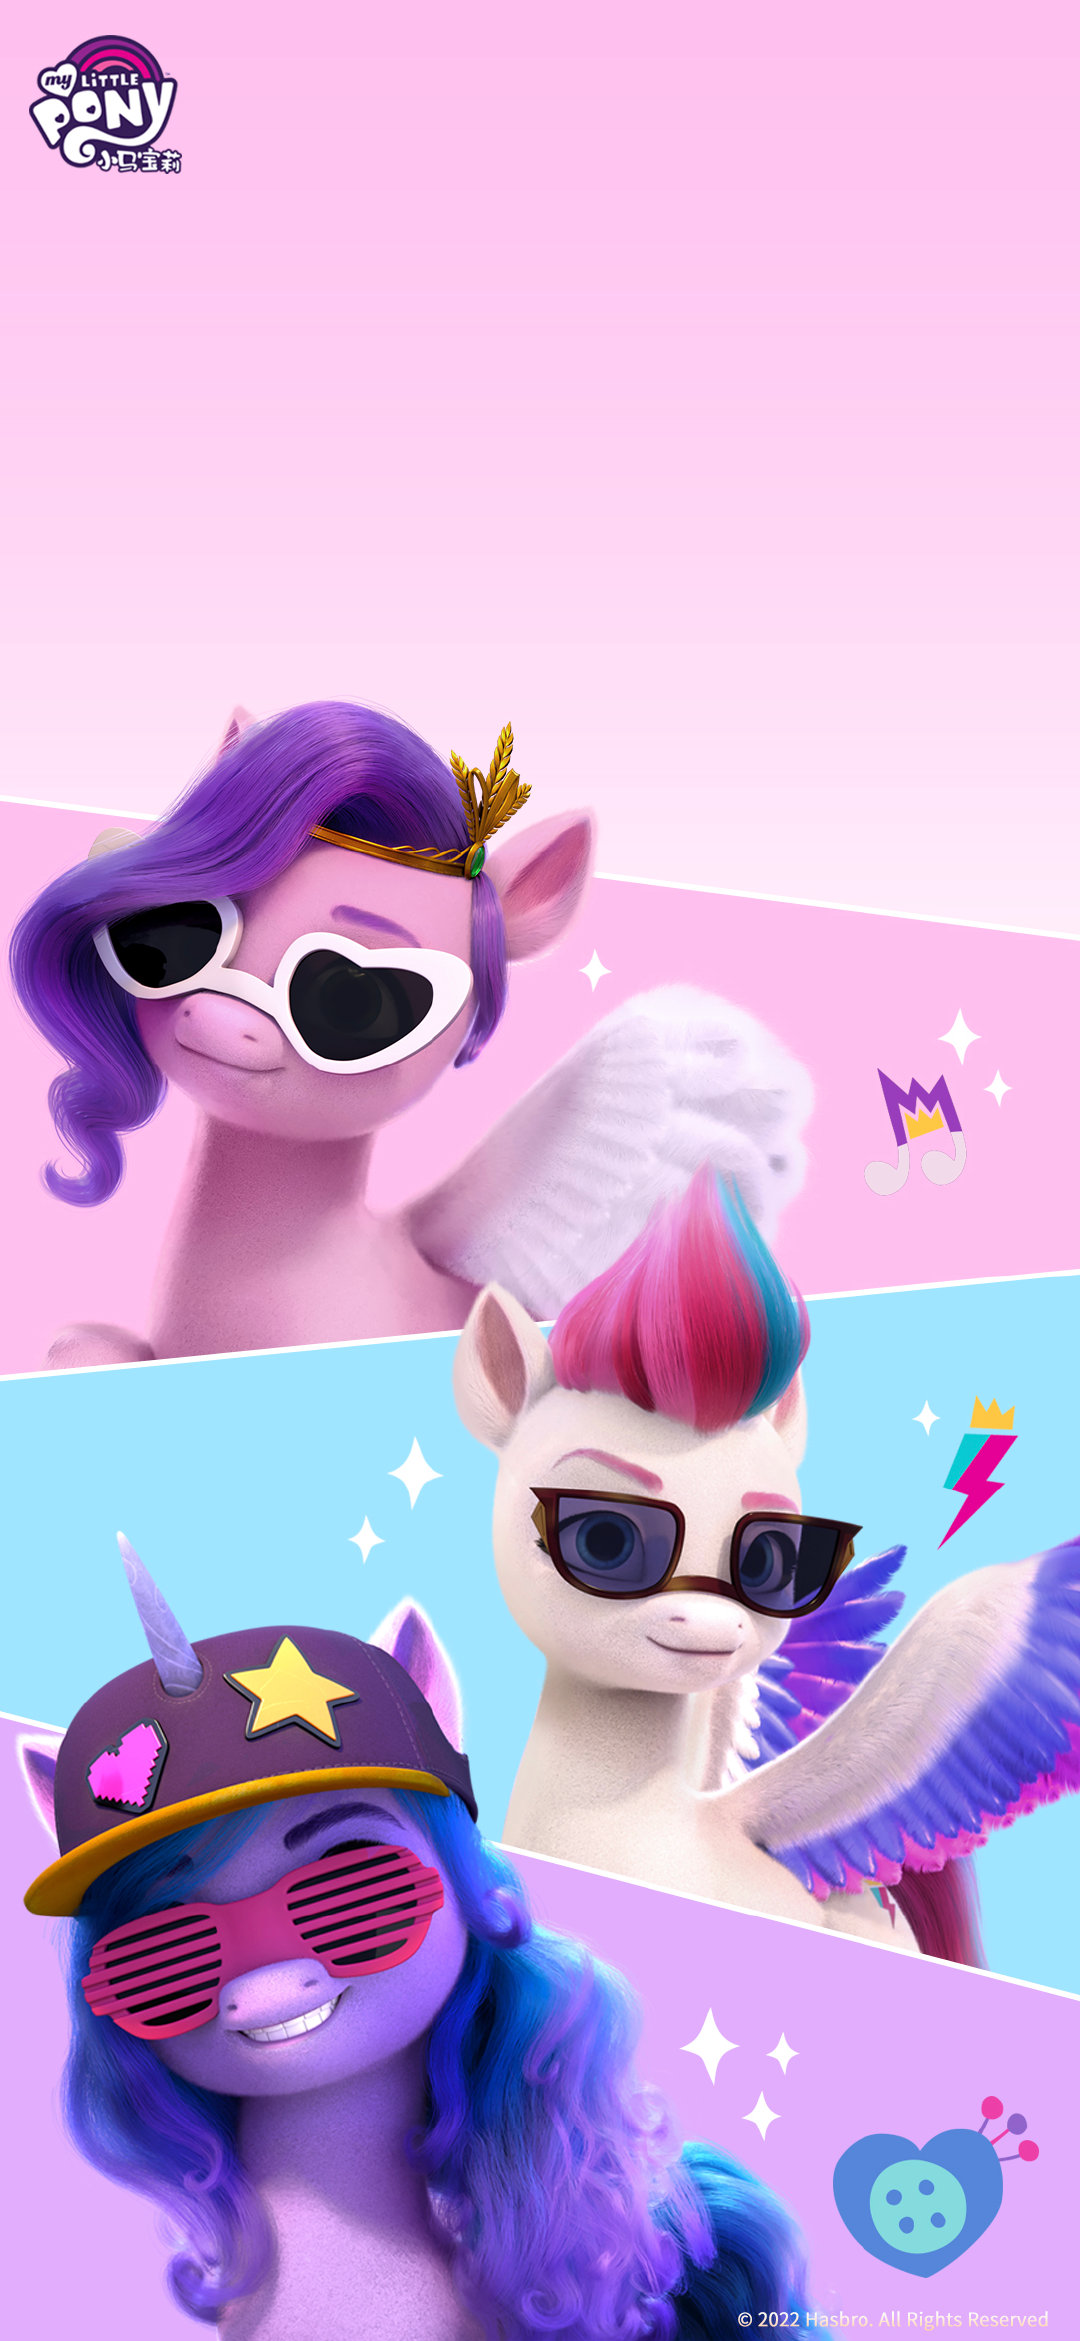 Wallpaper ID: 296602 / TV Show My Little Pony: Friendship is Magic Phone  Wallpaper, Fleur De Lis (My Little Pony), Fluttershy (My Little Pony),  Applejack (My Little Pony), Berryshine (My Little Pony),